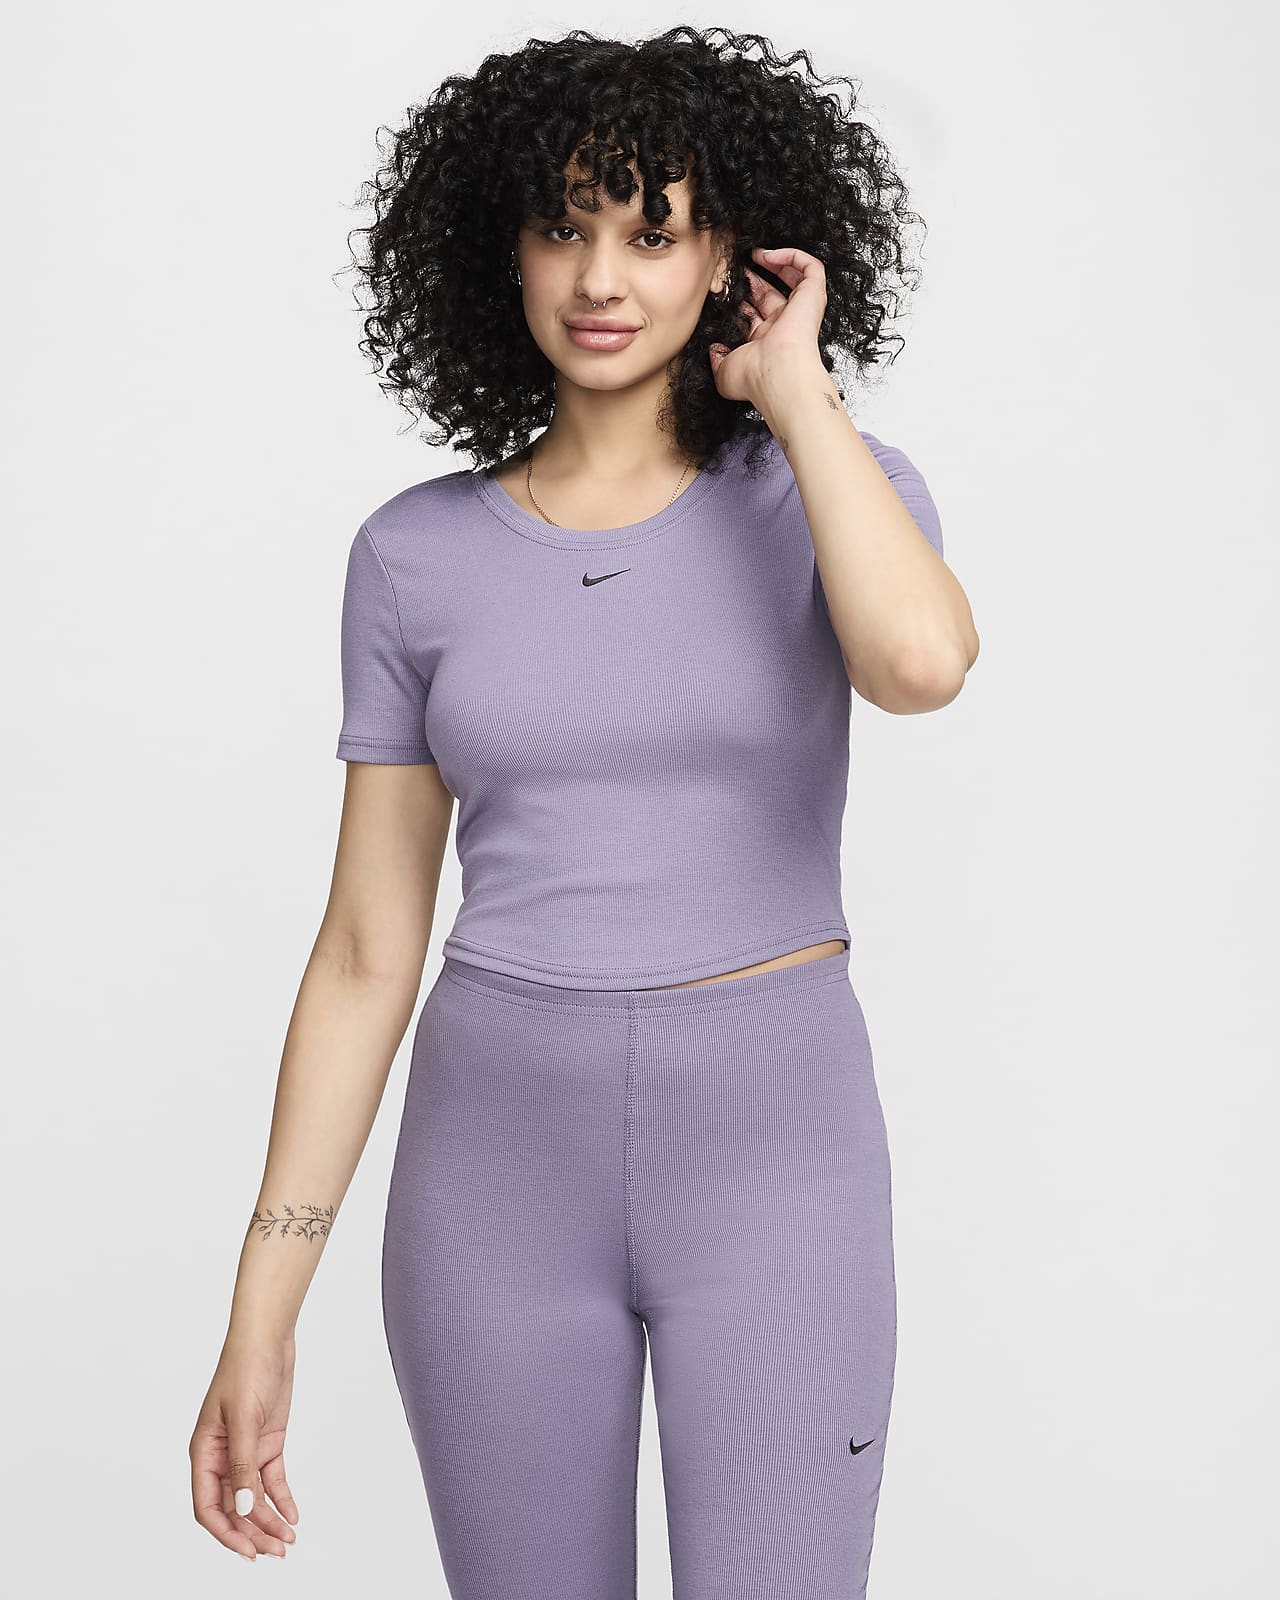 Playera de manga corta de tela de minicanalé ajustada con espalda redonda para mujer Nike Sportswear Chill Knit